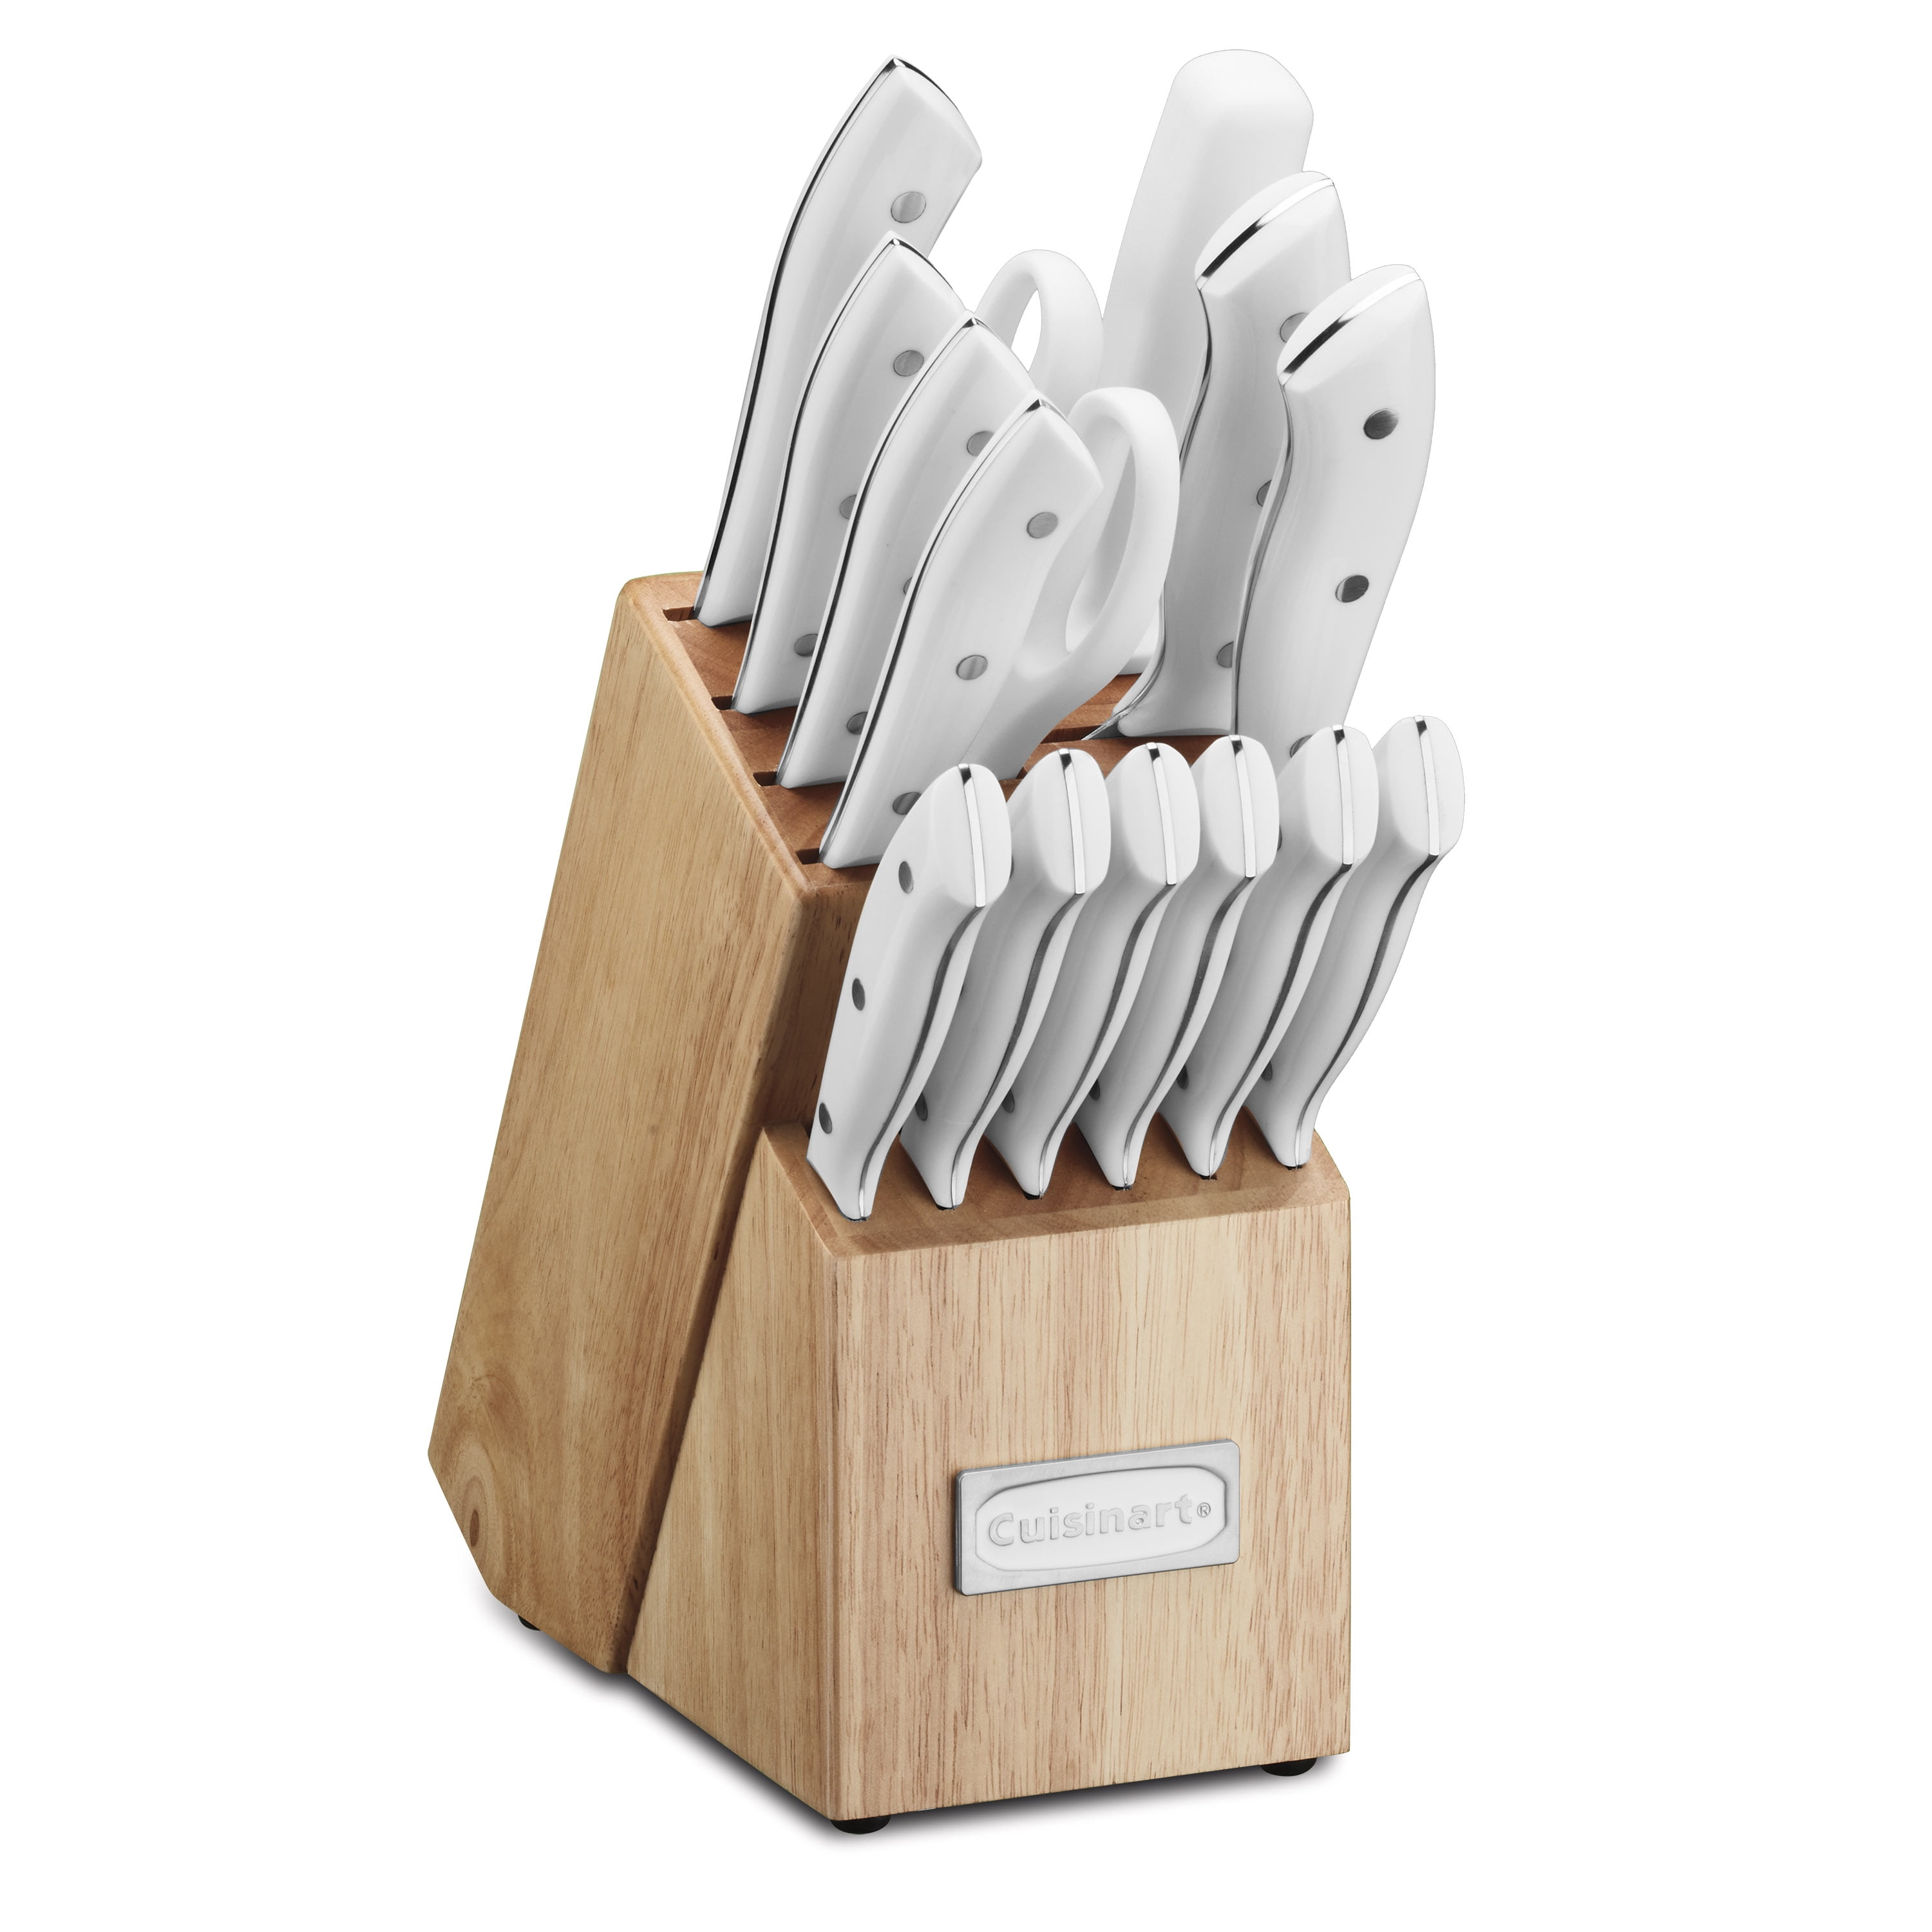 Cuisinart Color Pro Knife Block Set - White, Set of 4